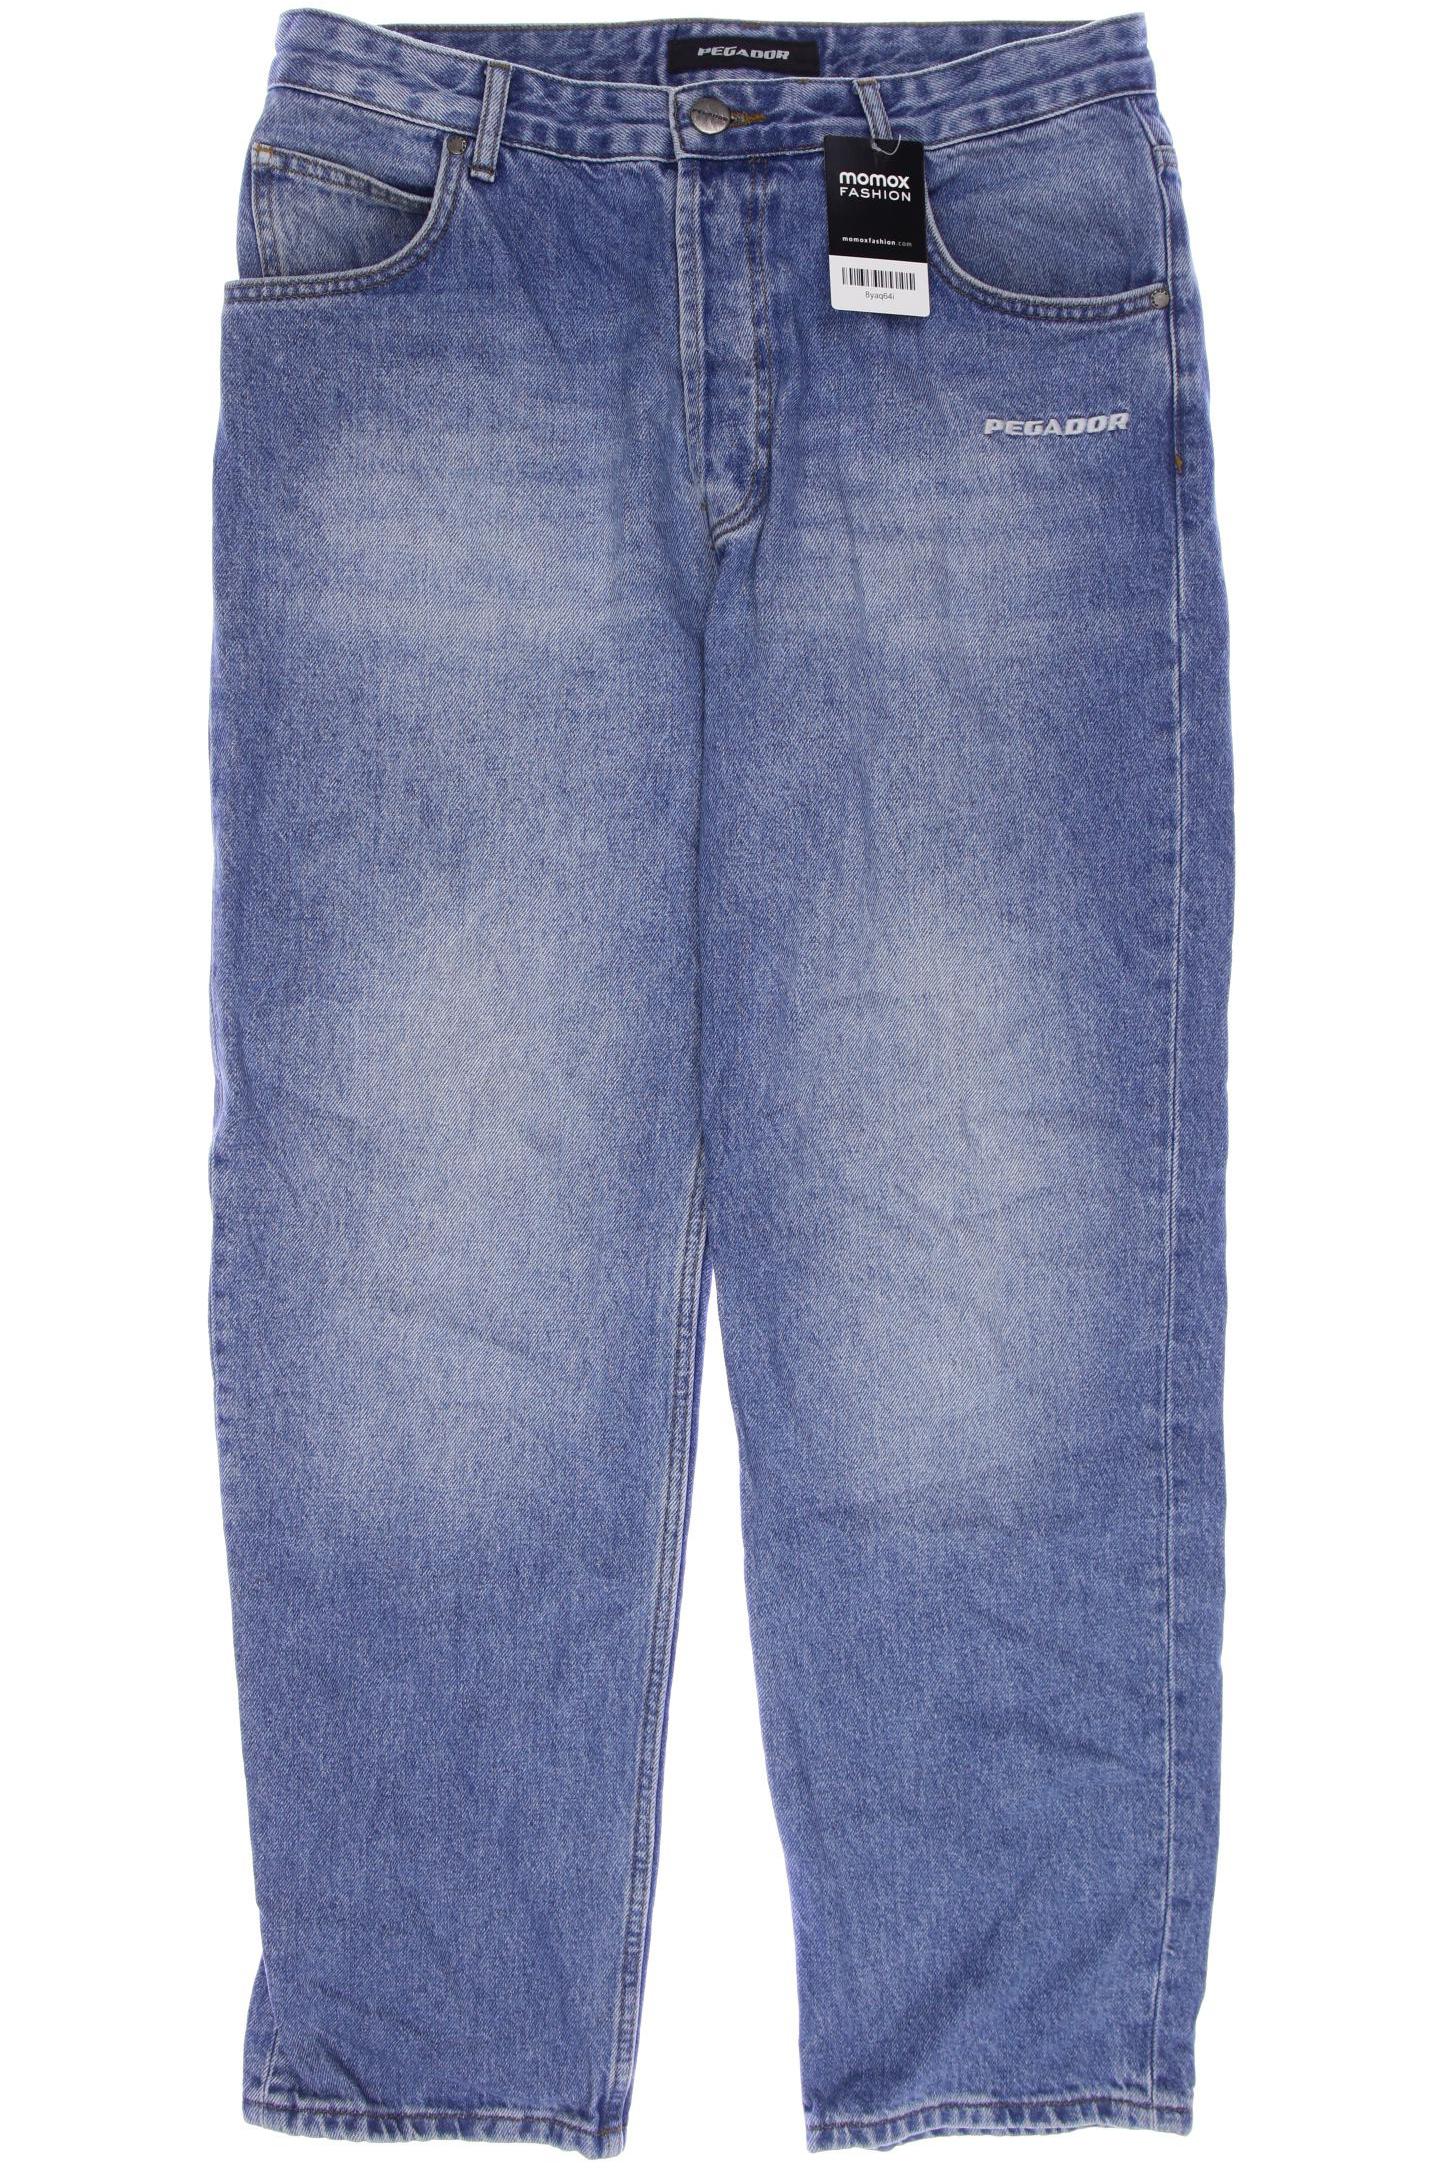 Pegador Herren Jeans, blau, Gr. 50 von Pegador